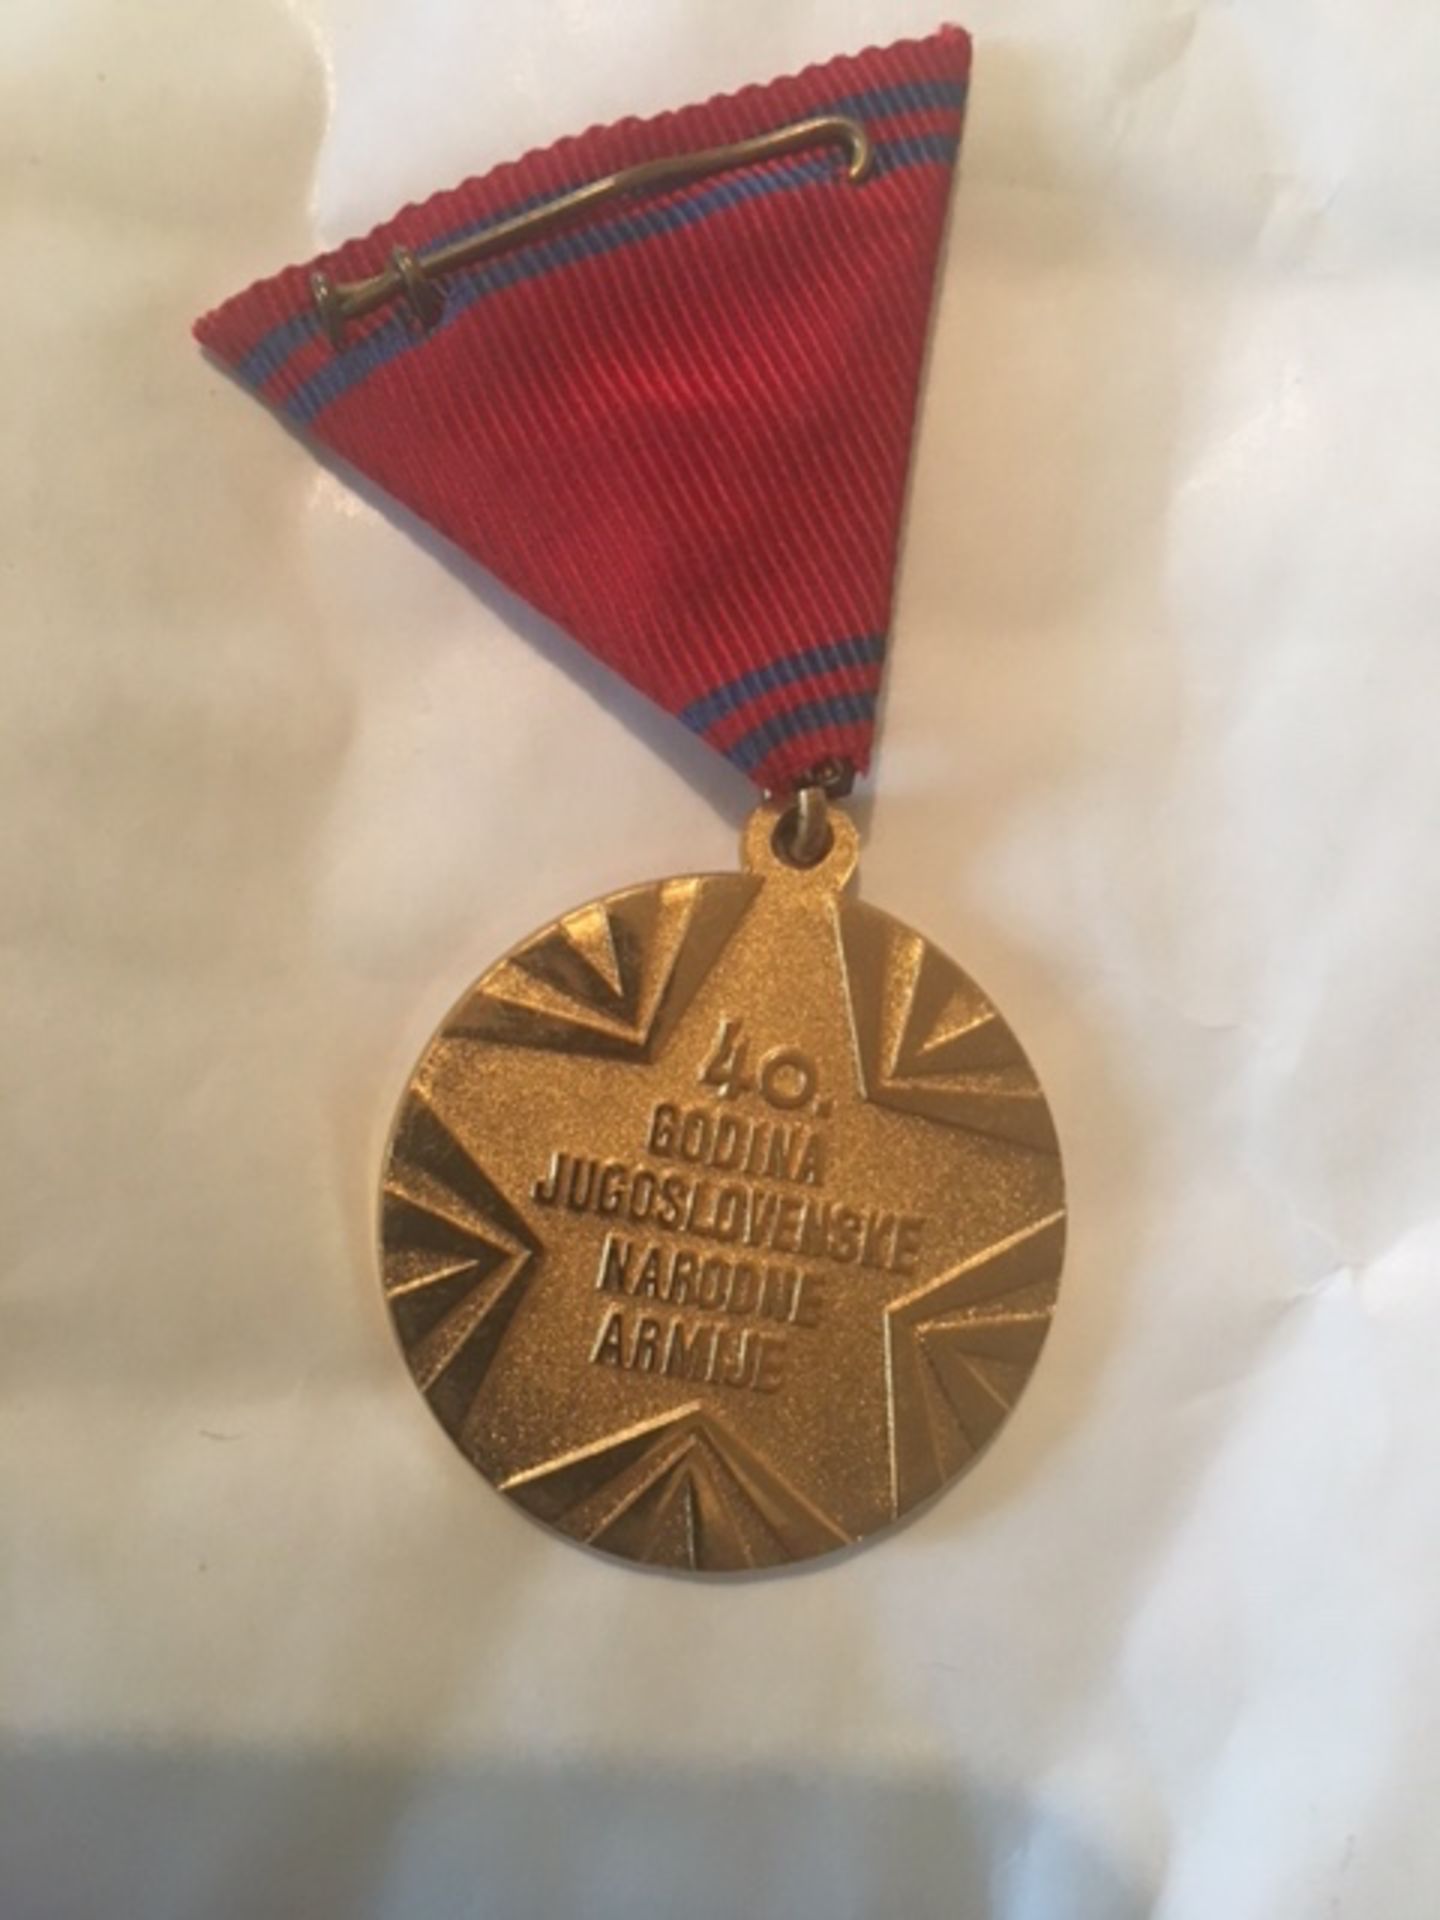 yugoslavia military medal 40th anniversary - Image 2 of 2